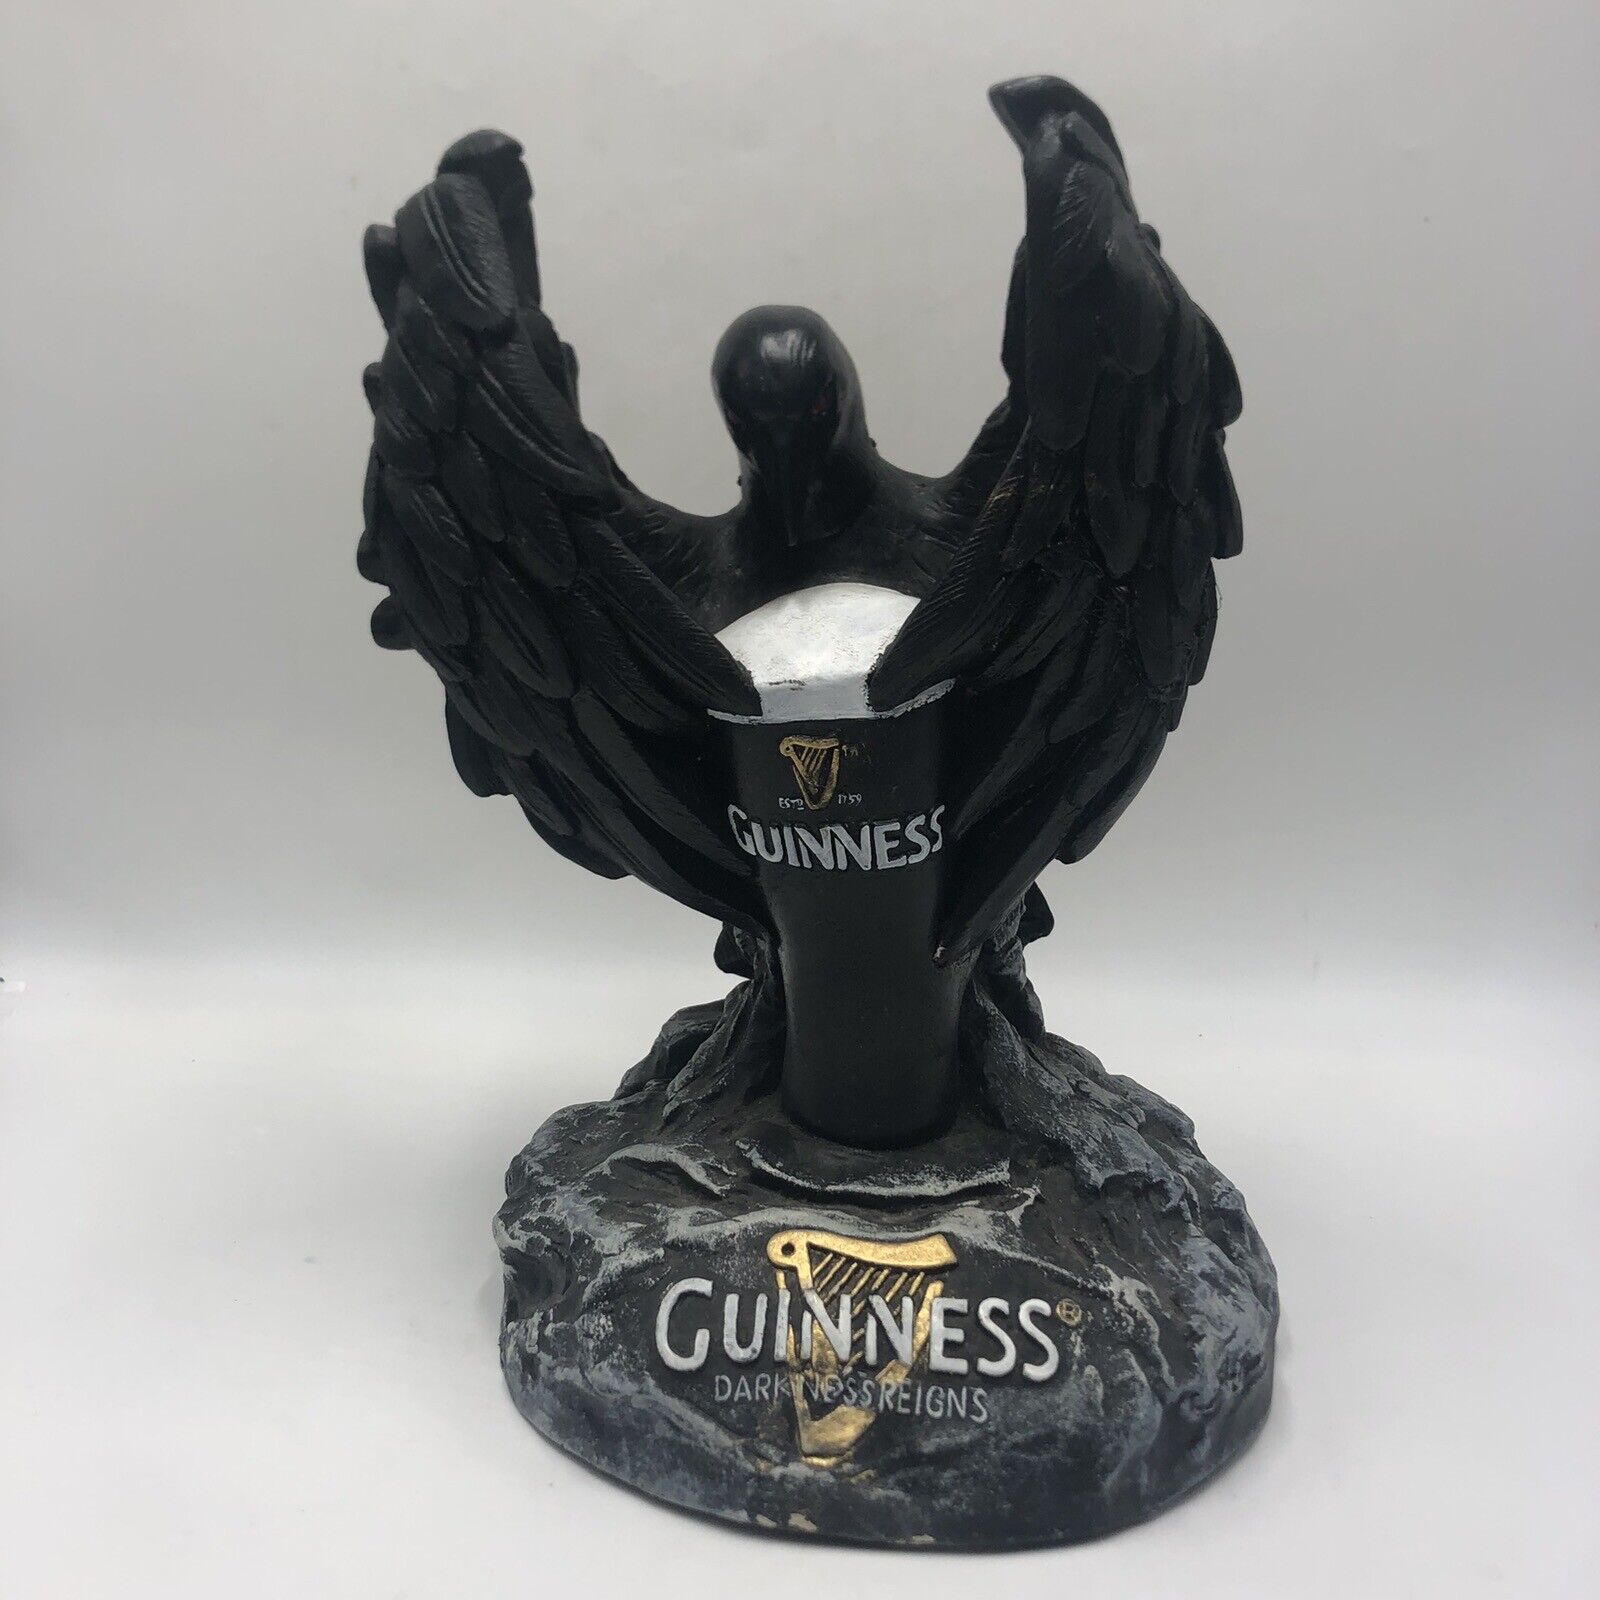 Vintage Guinness Darkness Reigns HALLOWEEN Advertising Foam Statue of Raven/Crow